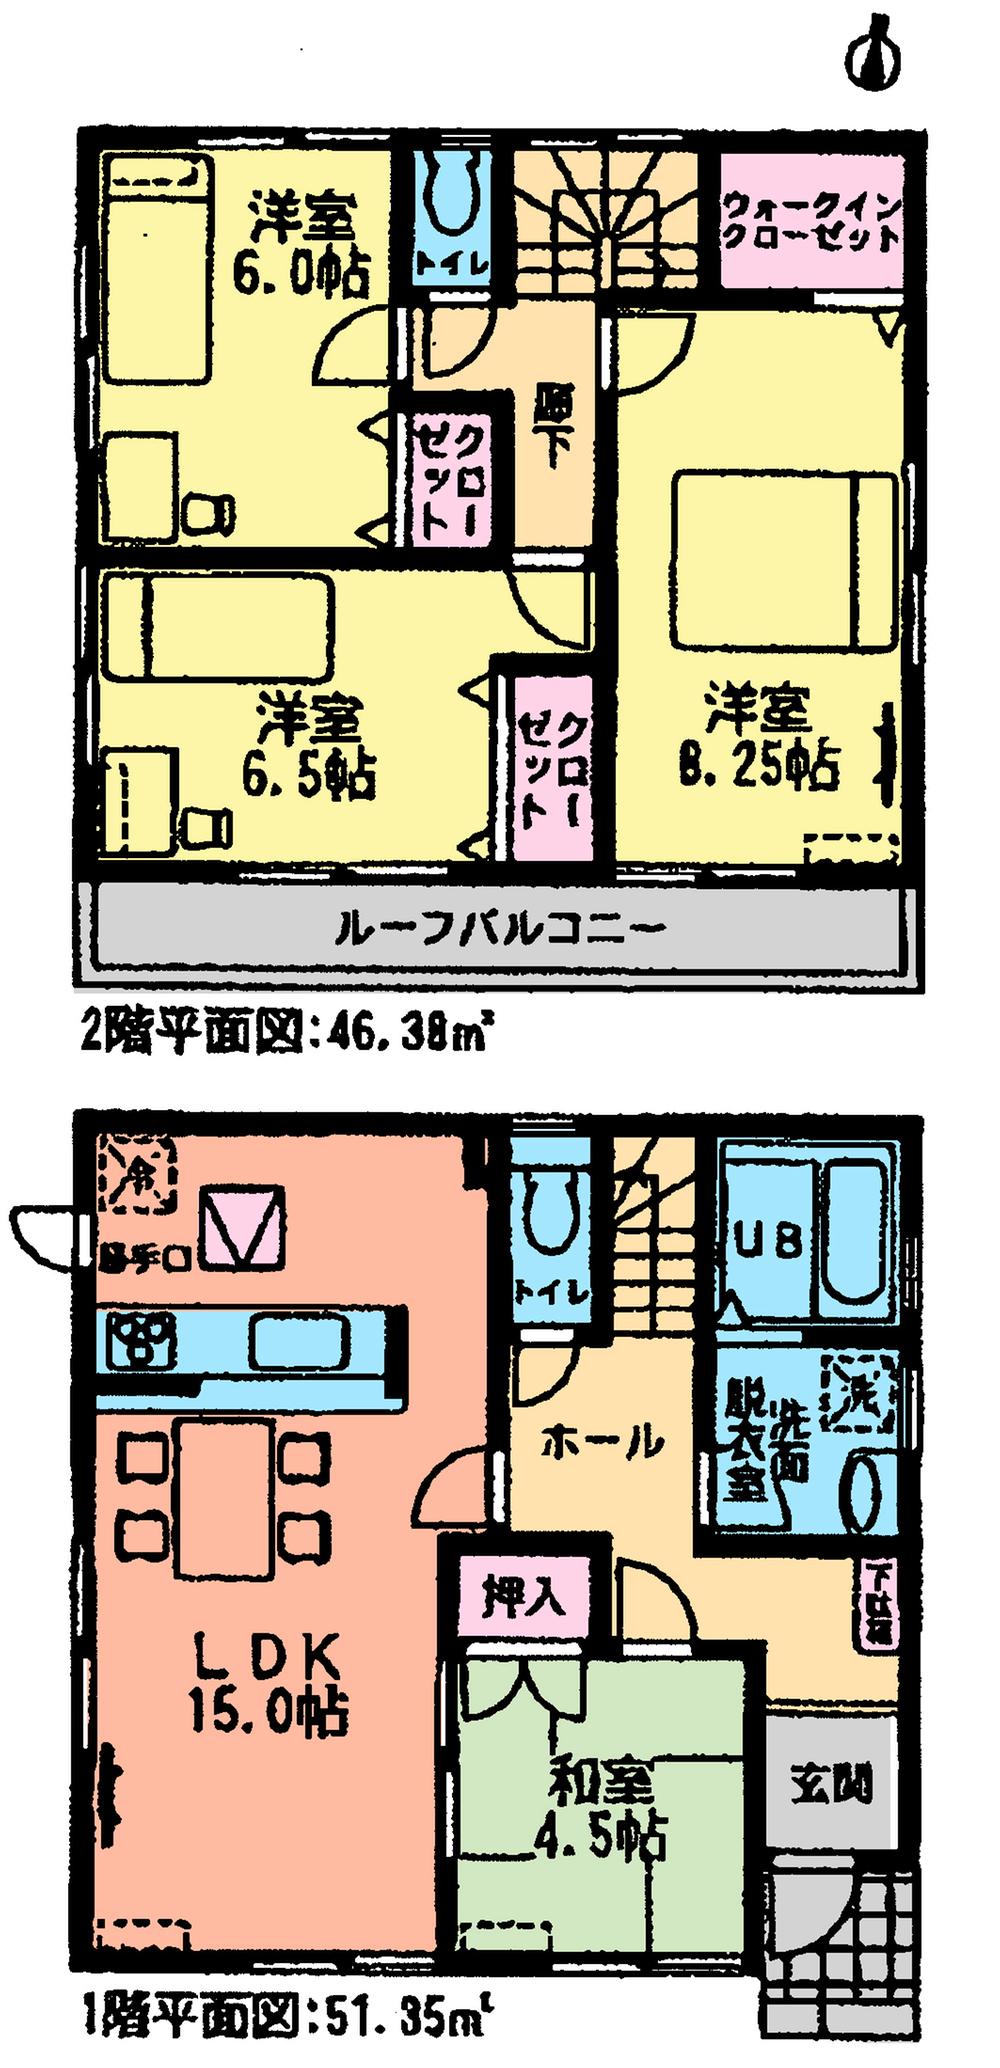 Floor plan. (3 Building), Price 31,800,000 yen, 4LDK, Land area 141 sq m , Building area 98.14 sq m